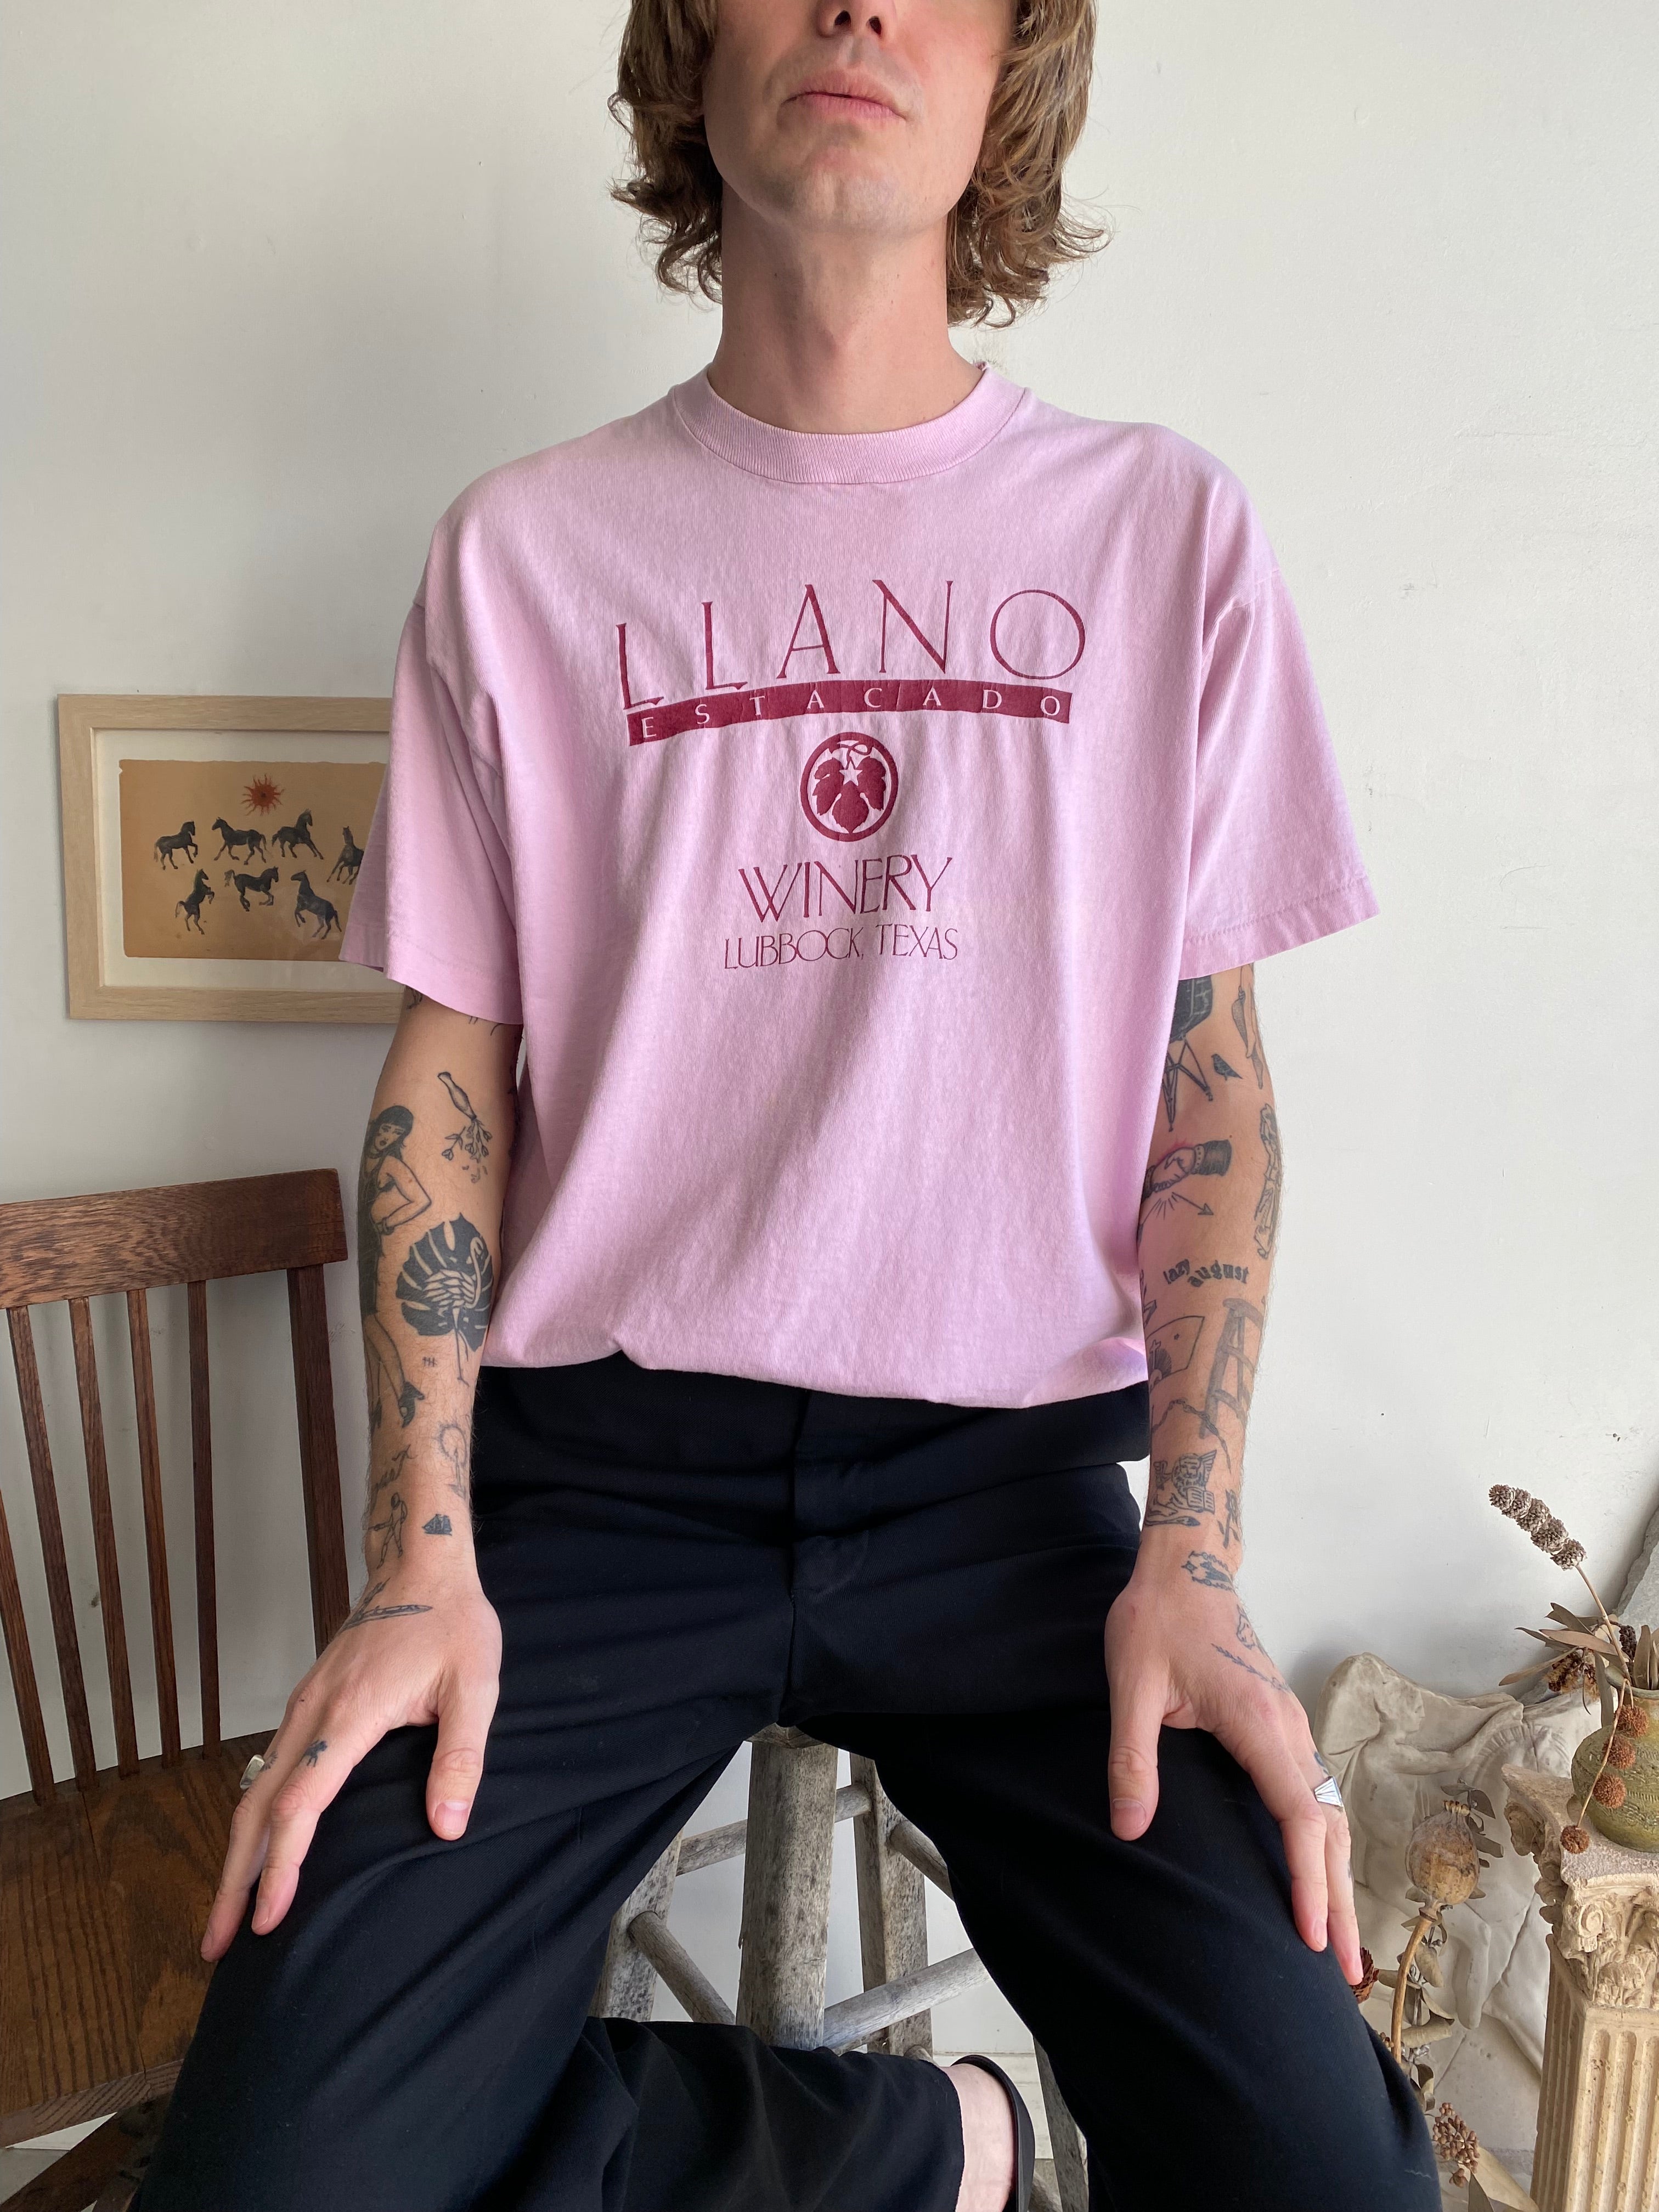 1990s Llano Winery T-Shirt (XL)